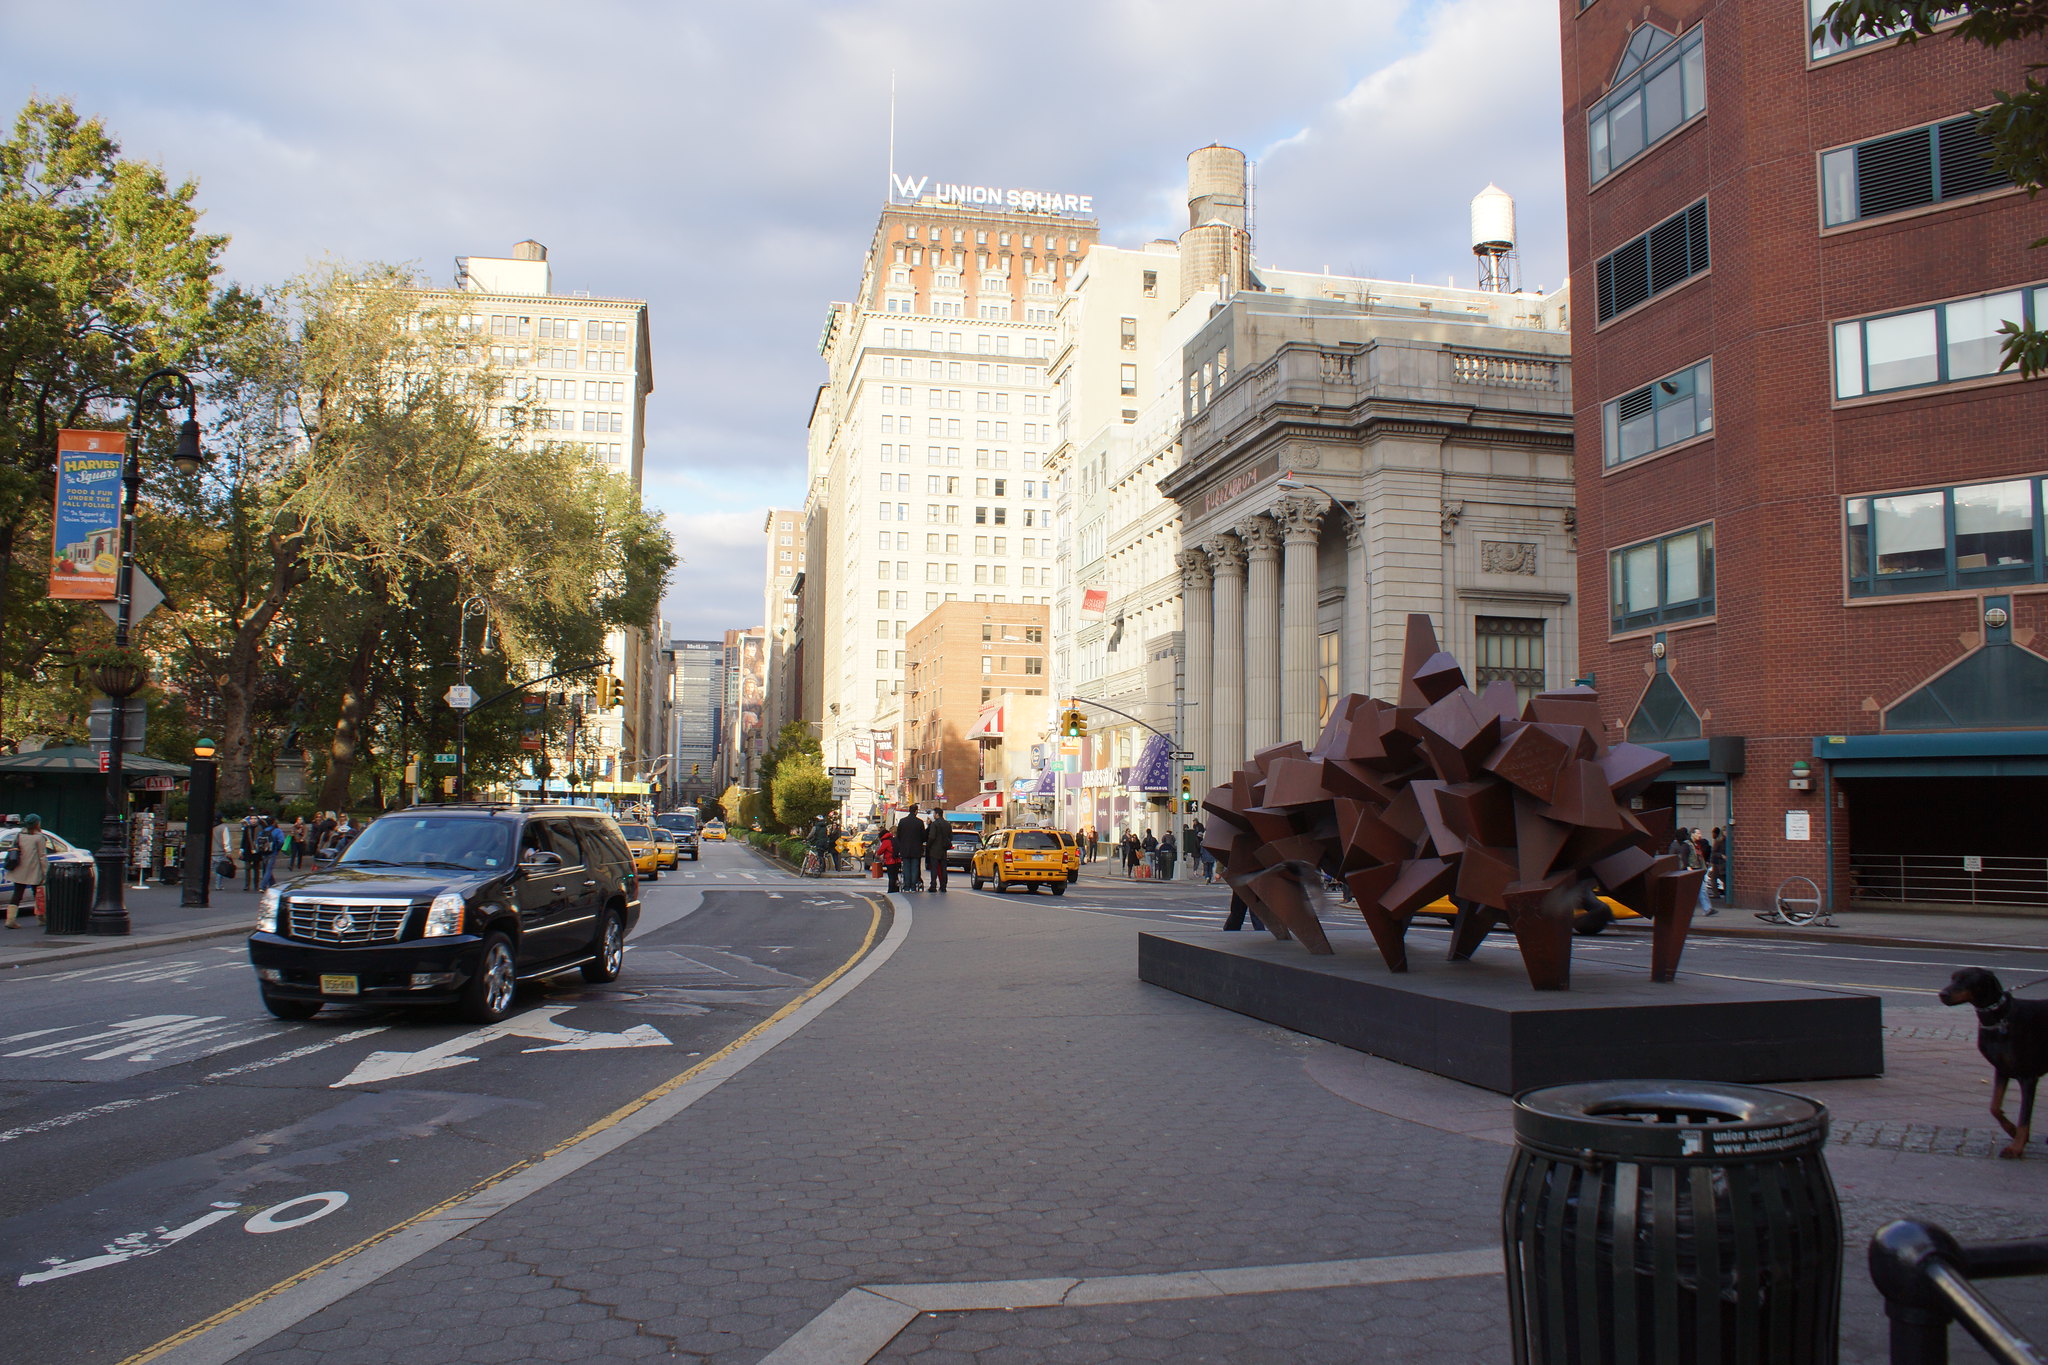 New York 2012